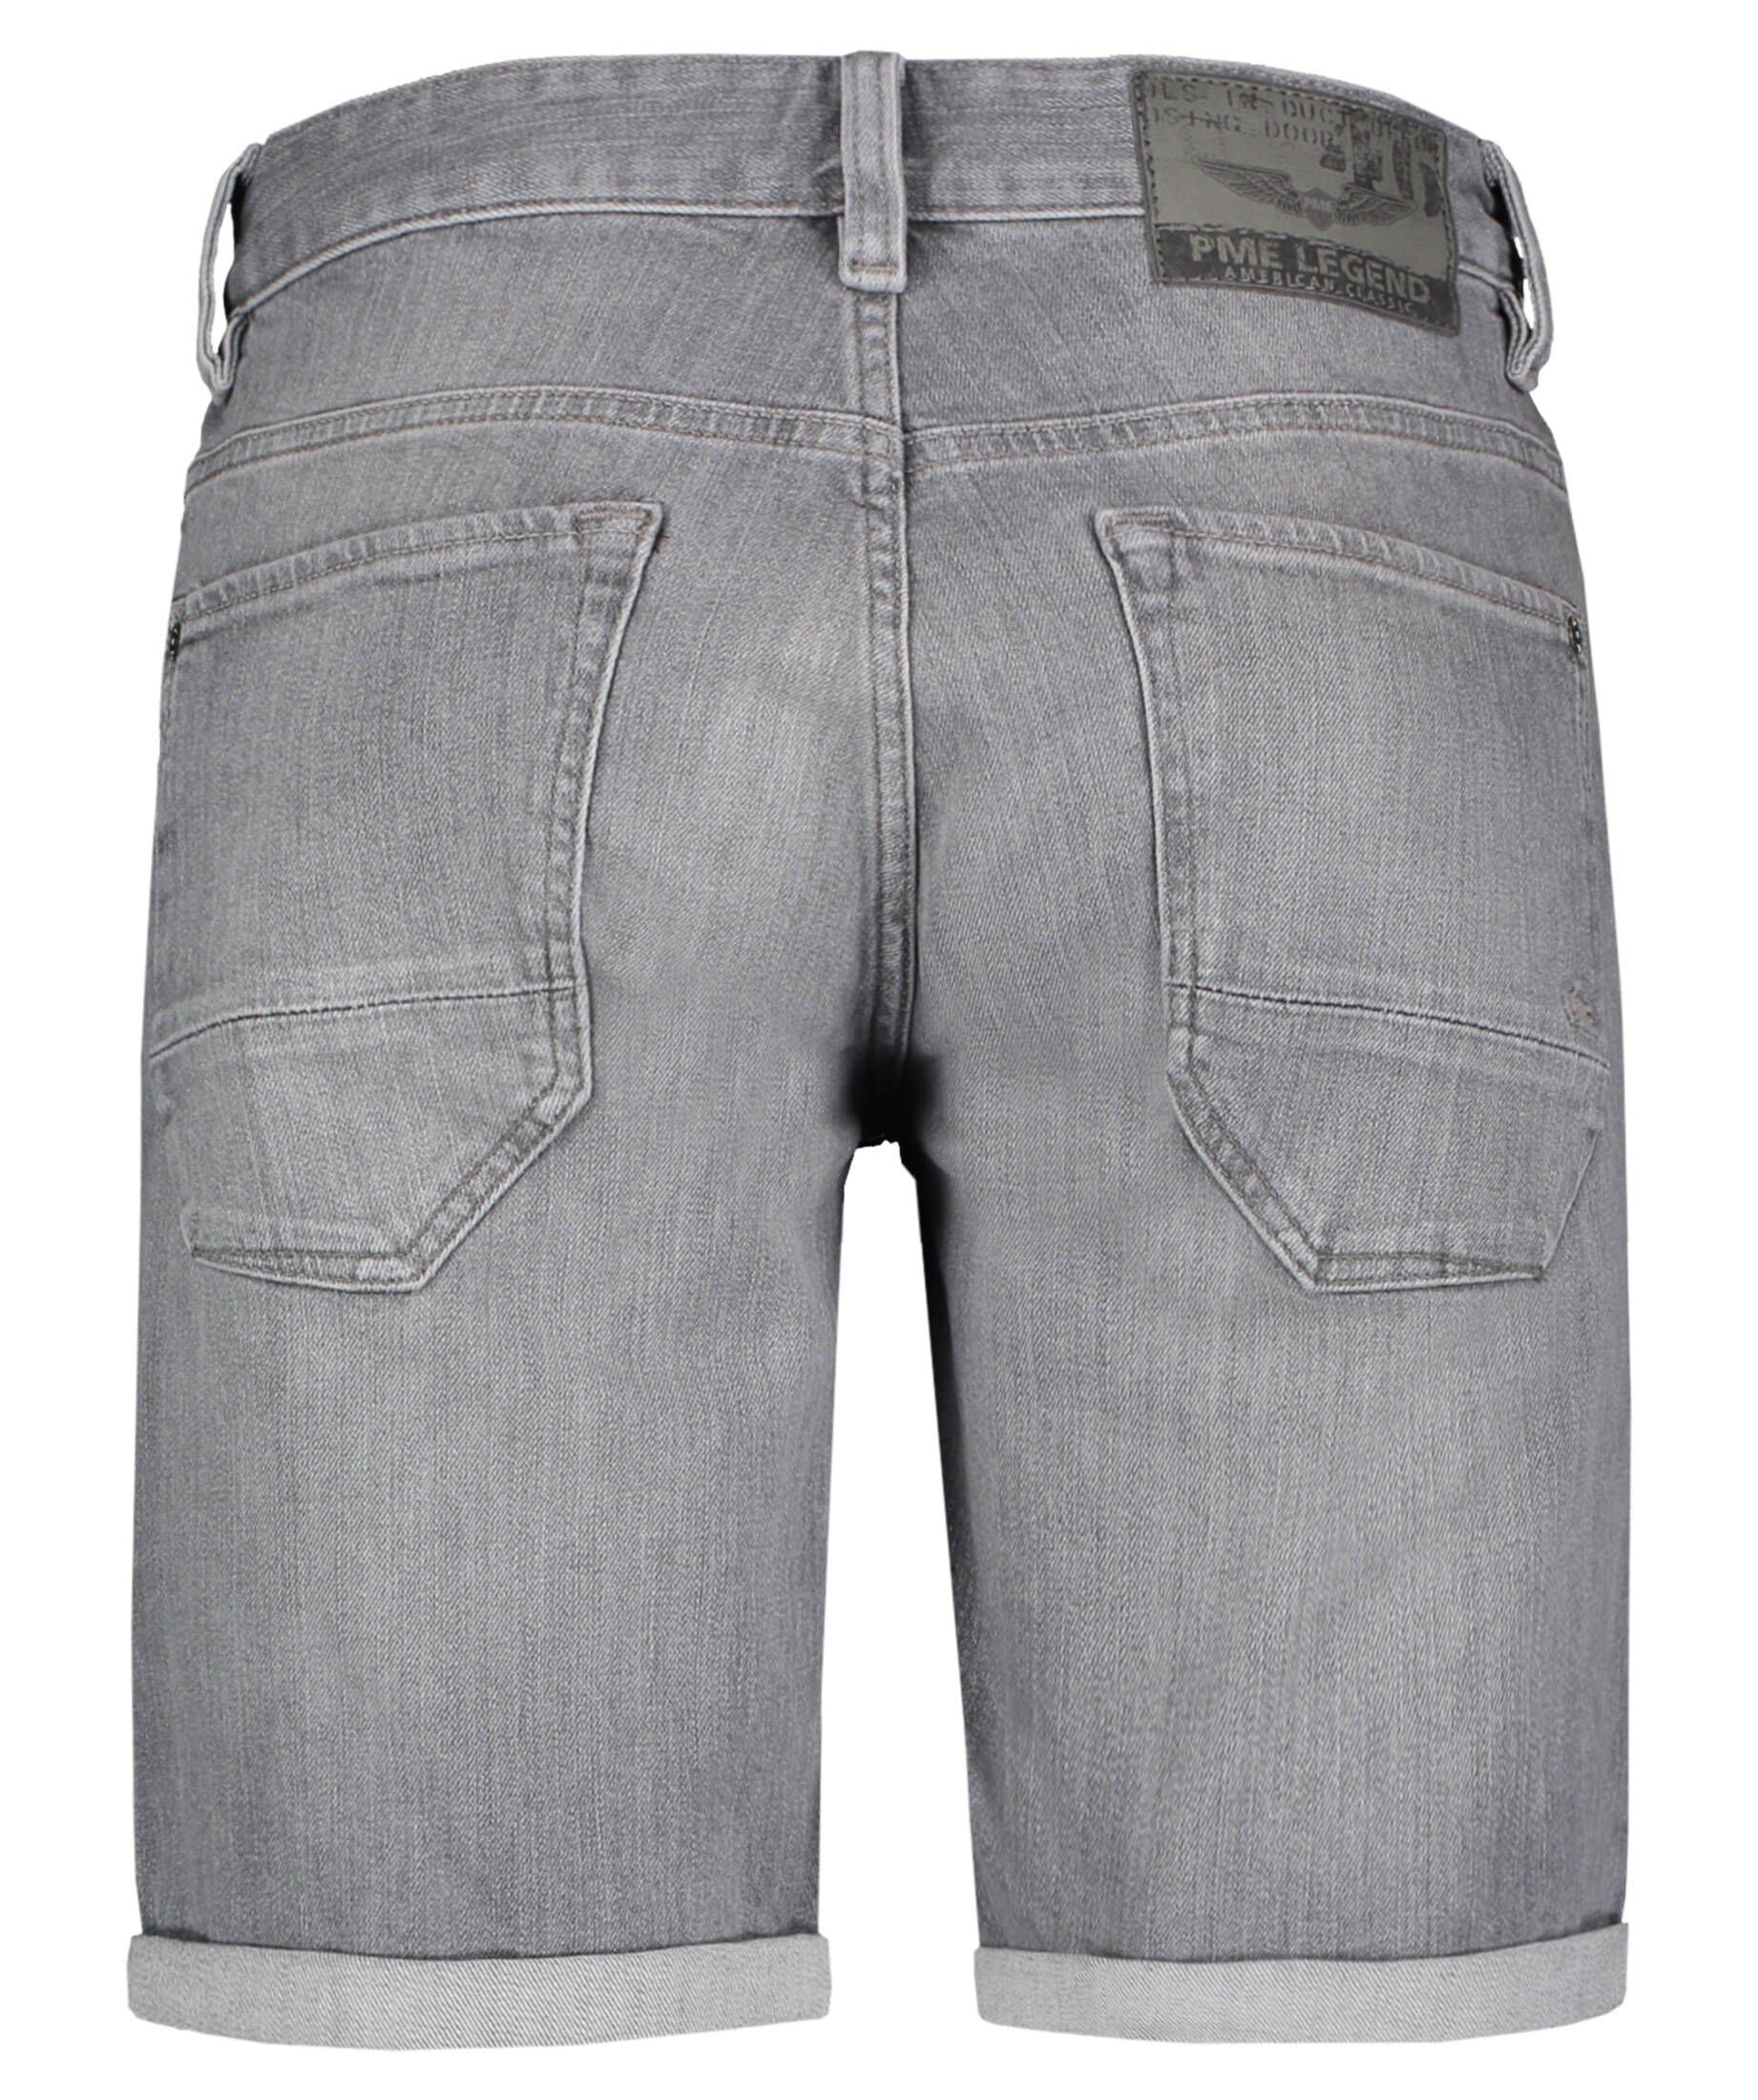 Fit Regular Herren silber Jeanshorts (12) PME NIGHTFLIGHT Jeansshorts LEGEND